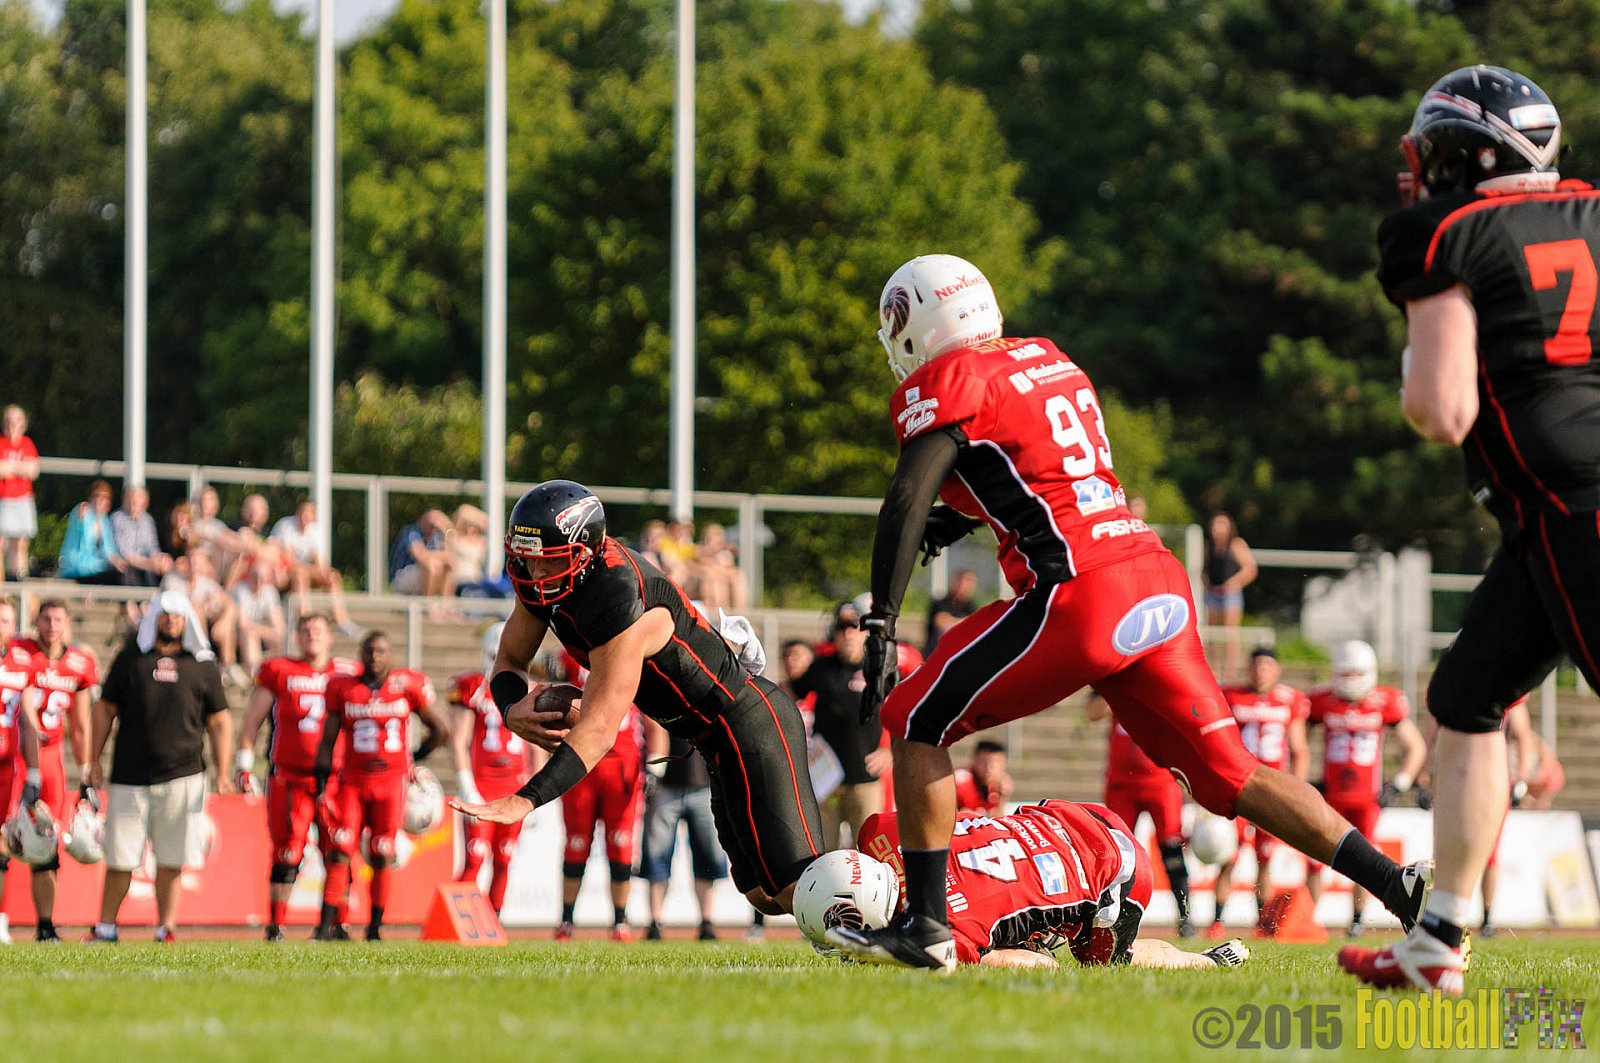 Düsseldorf Panther vs. NewYorker Lions Braunschweig - 22.08.2015 GFL Nord: Düsseldorf Panther vs. NewYorker Lions Braunschweig (0:56)